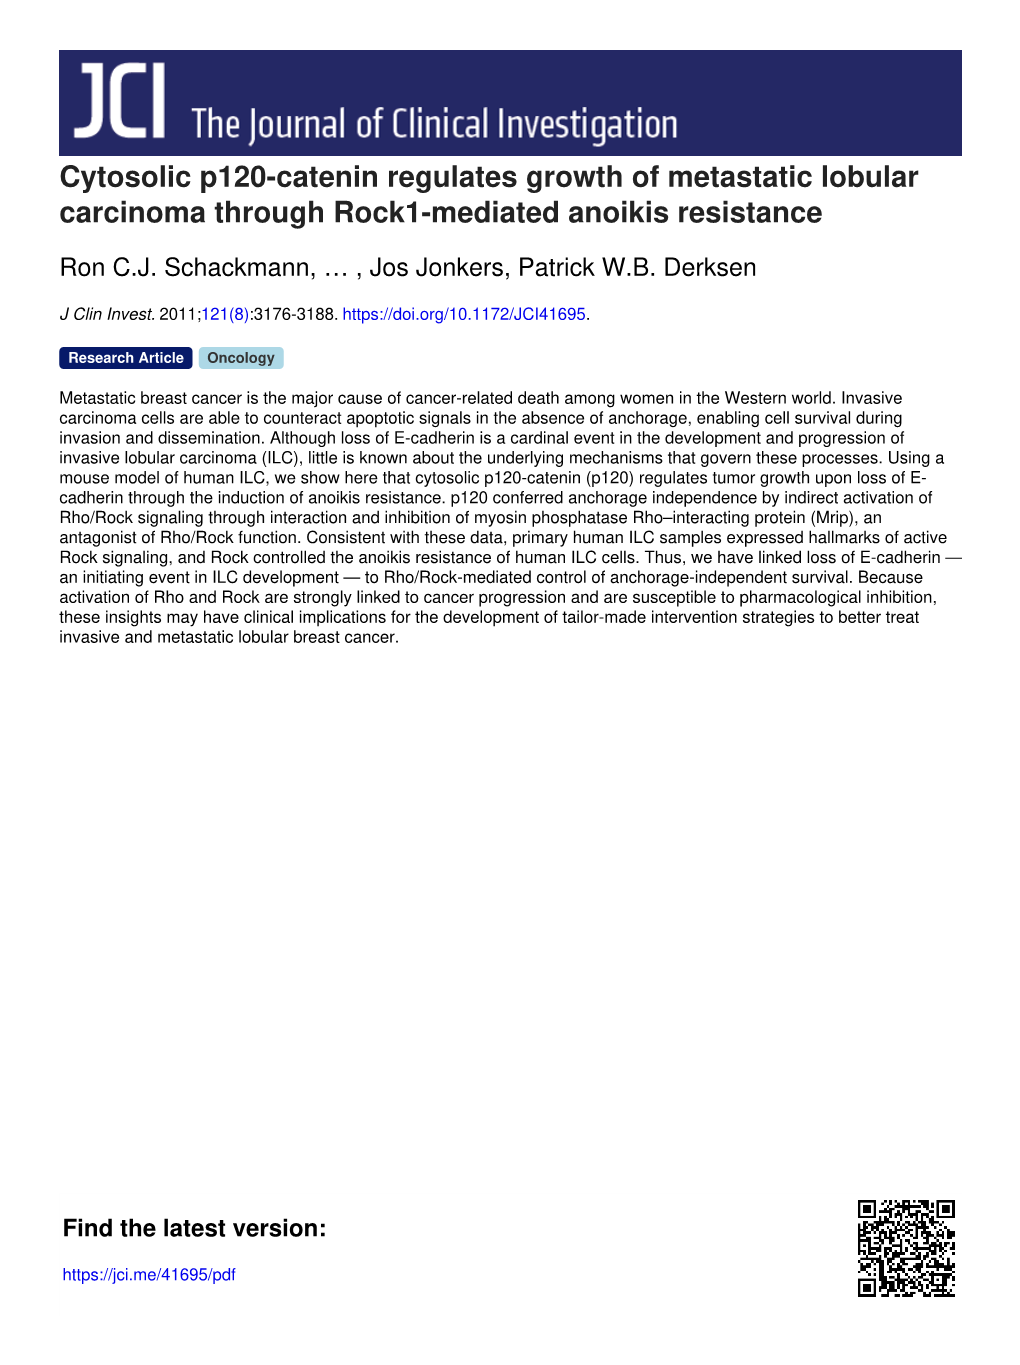 Cytosolic P120-Catenin Regulates Growth of Metastatic Lobular Carcinoma Through Rock1-Mediated Anoikis Resistance